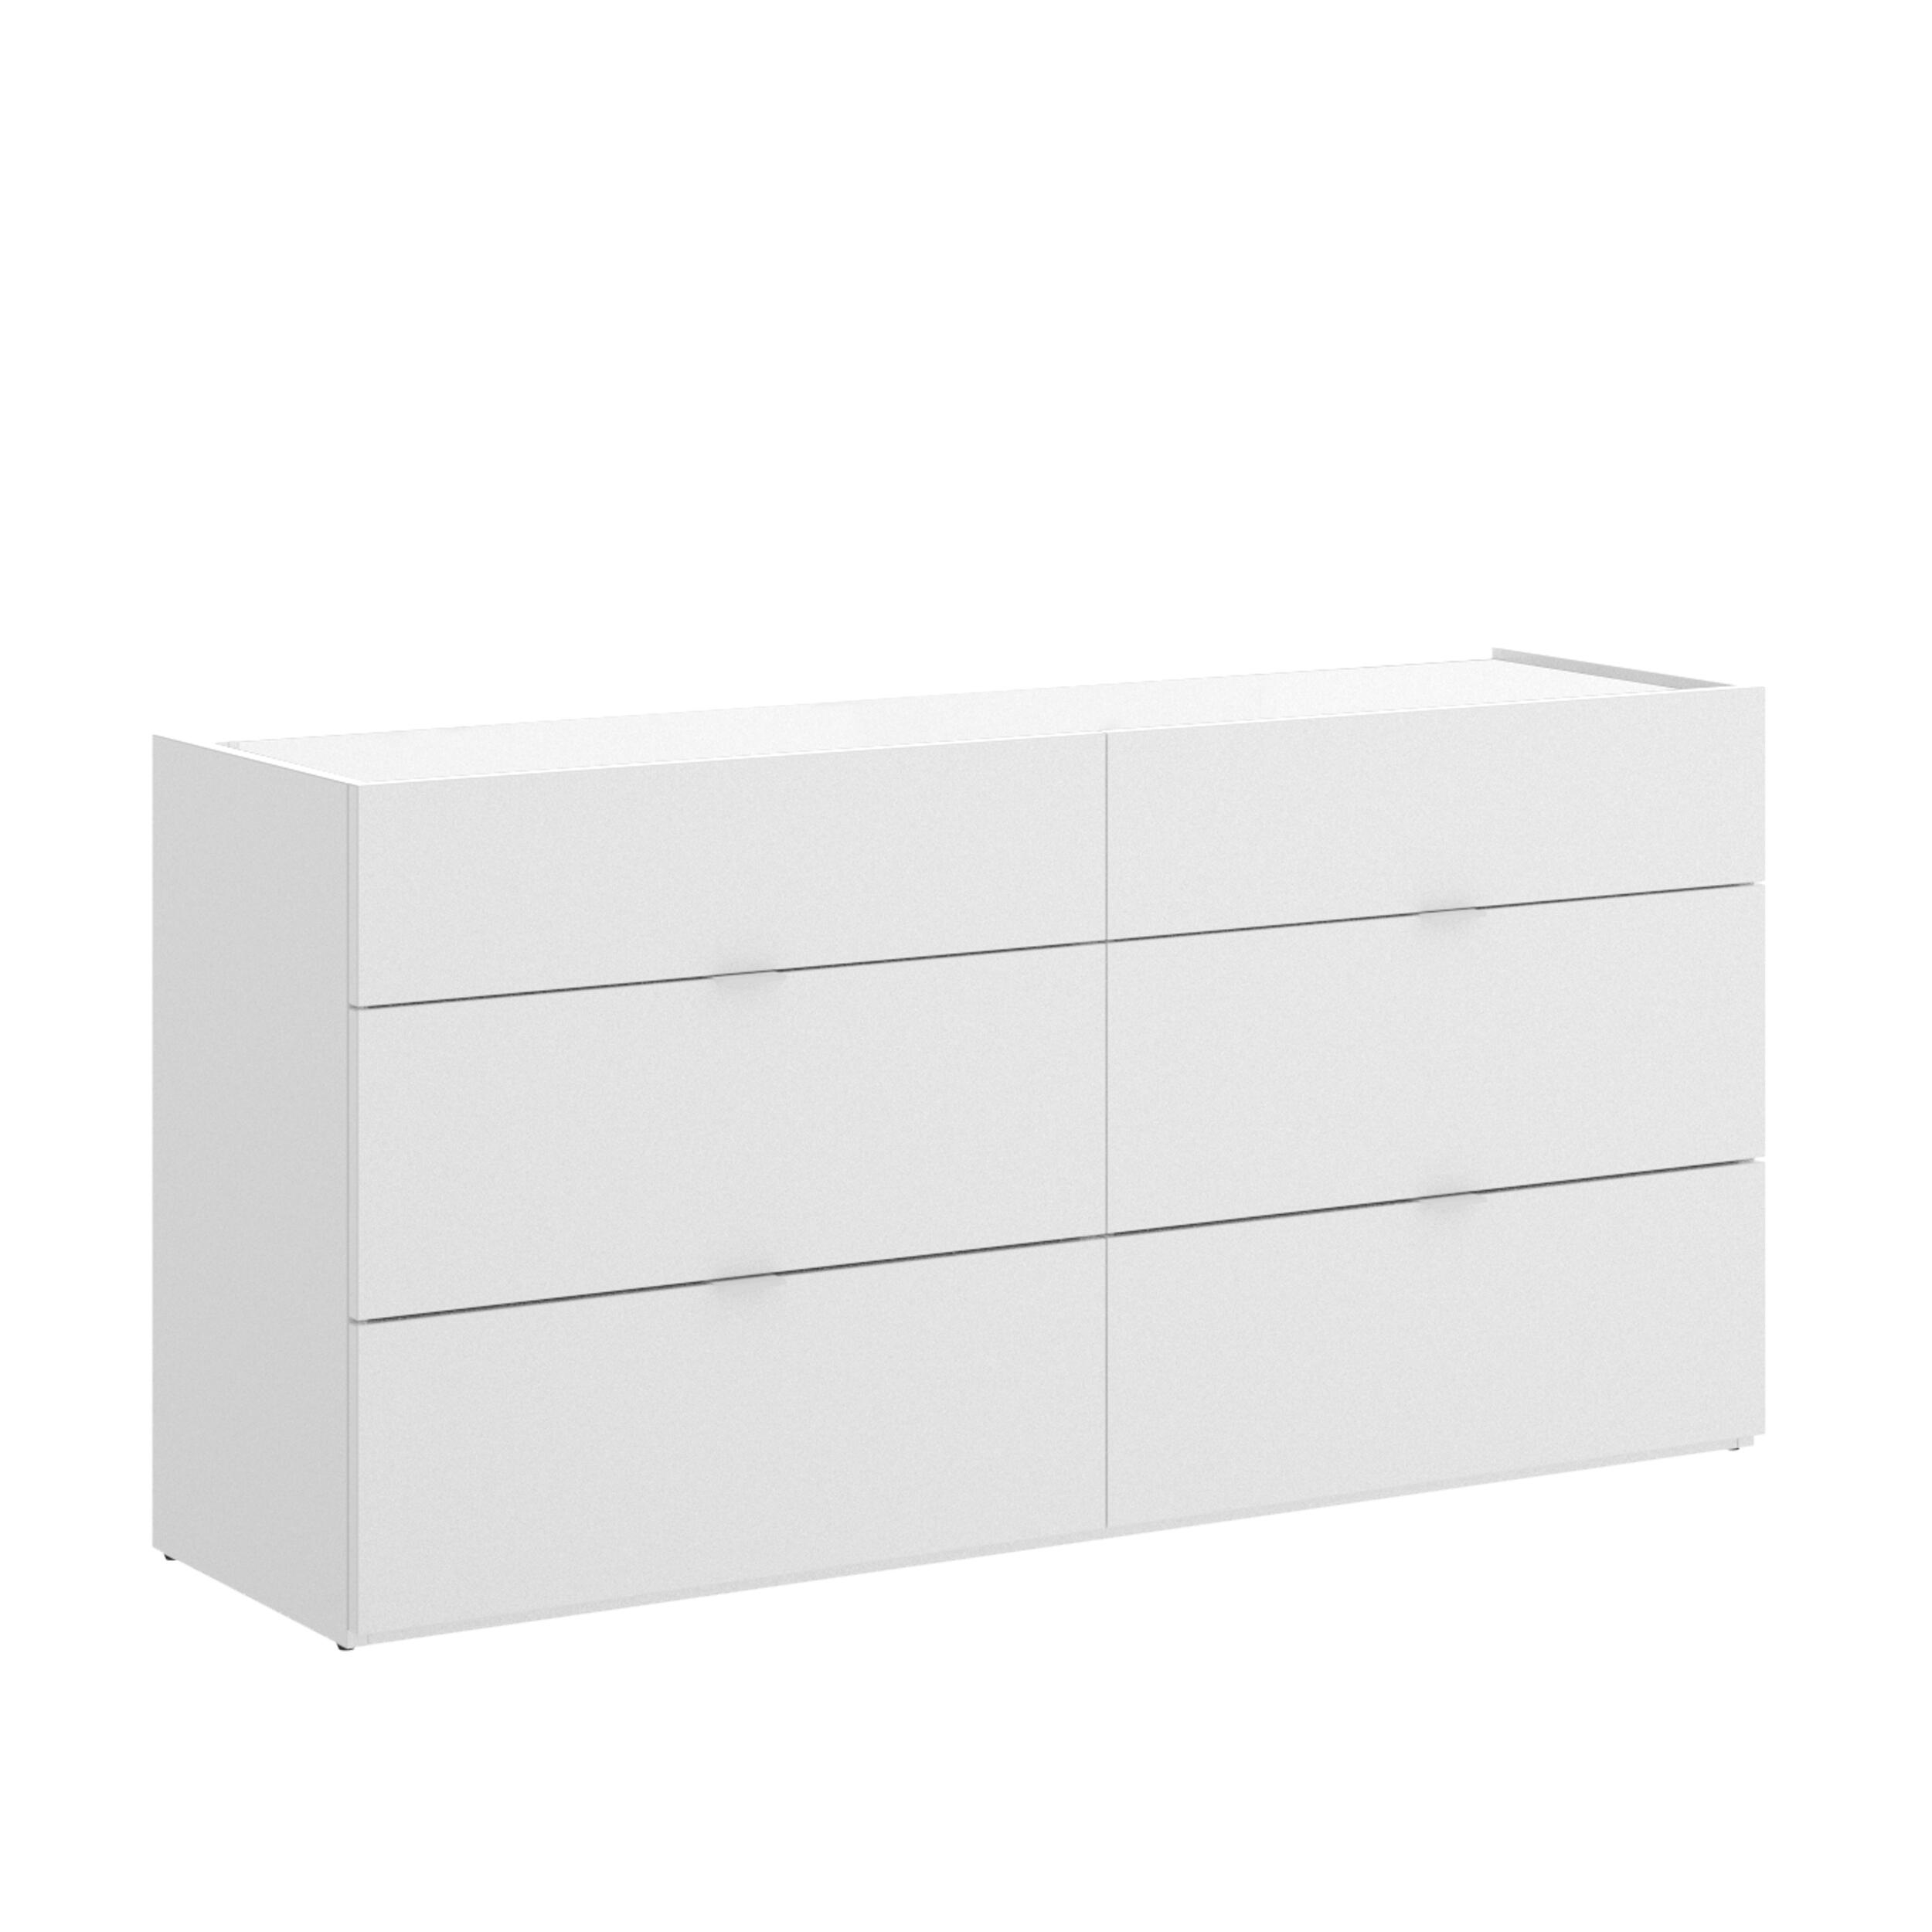 Cómoda kit -mueble auxiliar tay blanco 120x39x62 cm